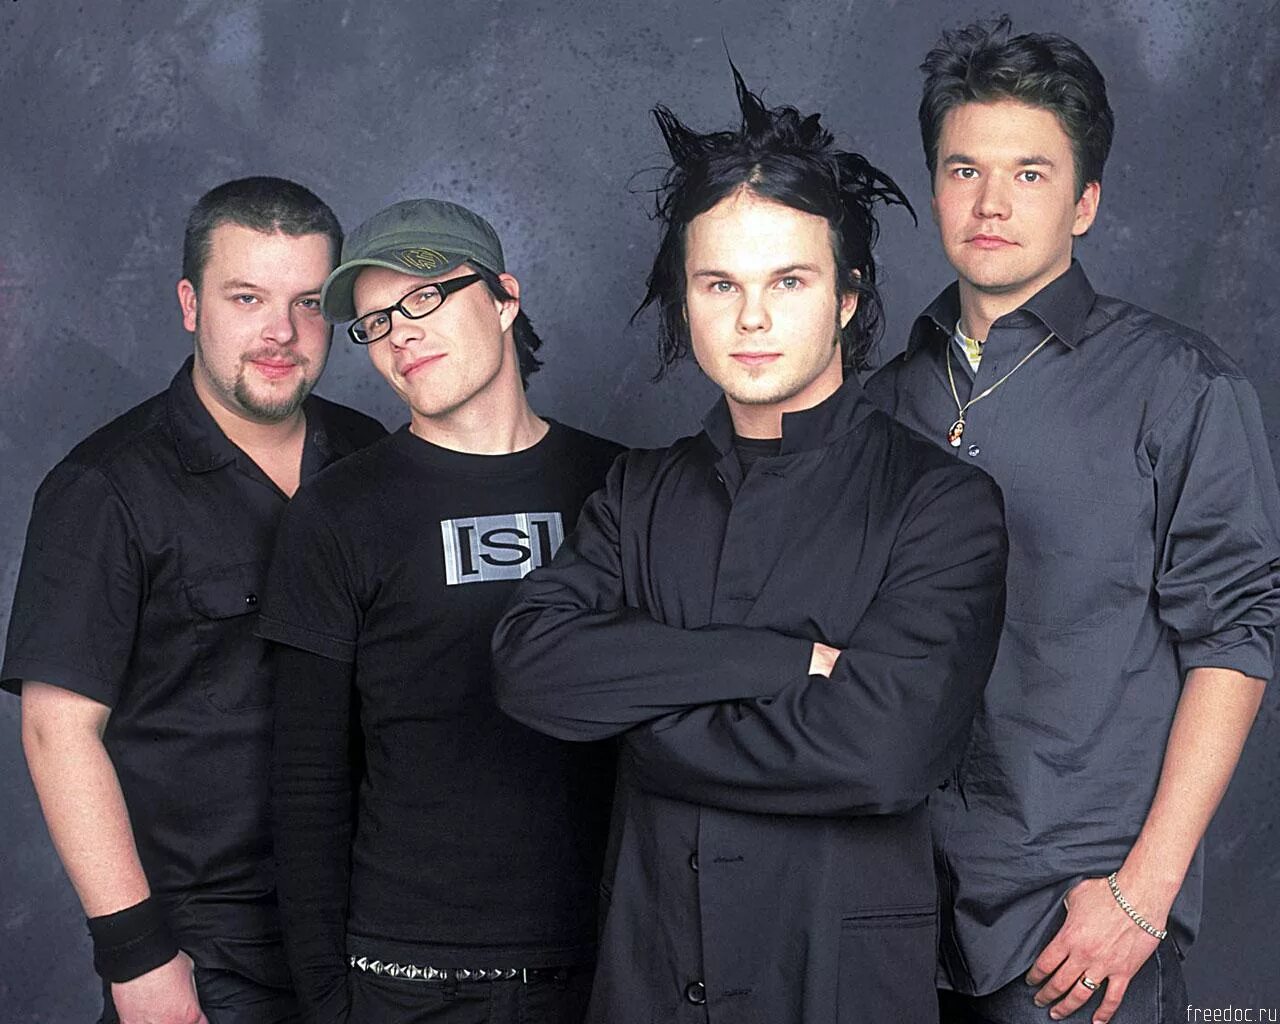 Группа некоторые. The Rasmus. Расмус группа. Группа Расмус в 2000. Финская группа Расмус.